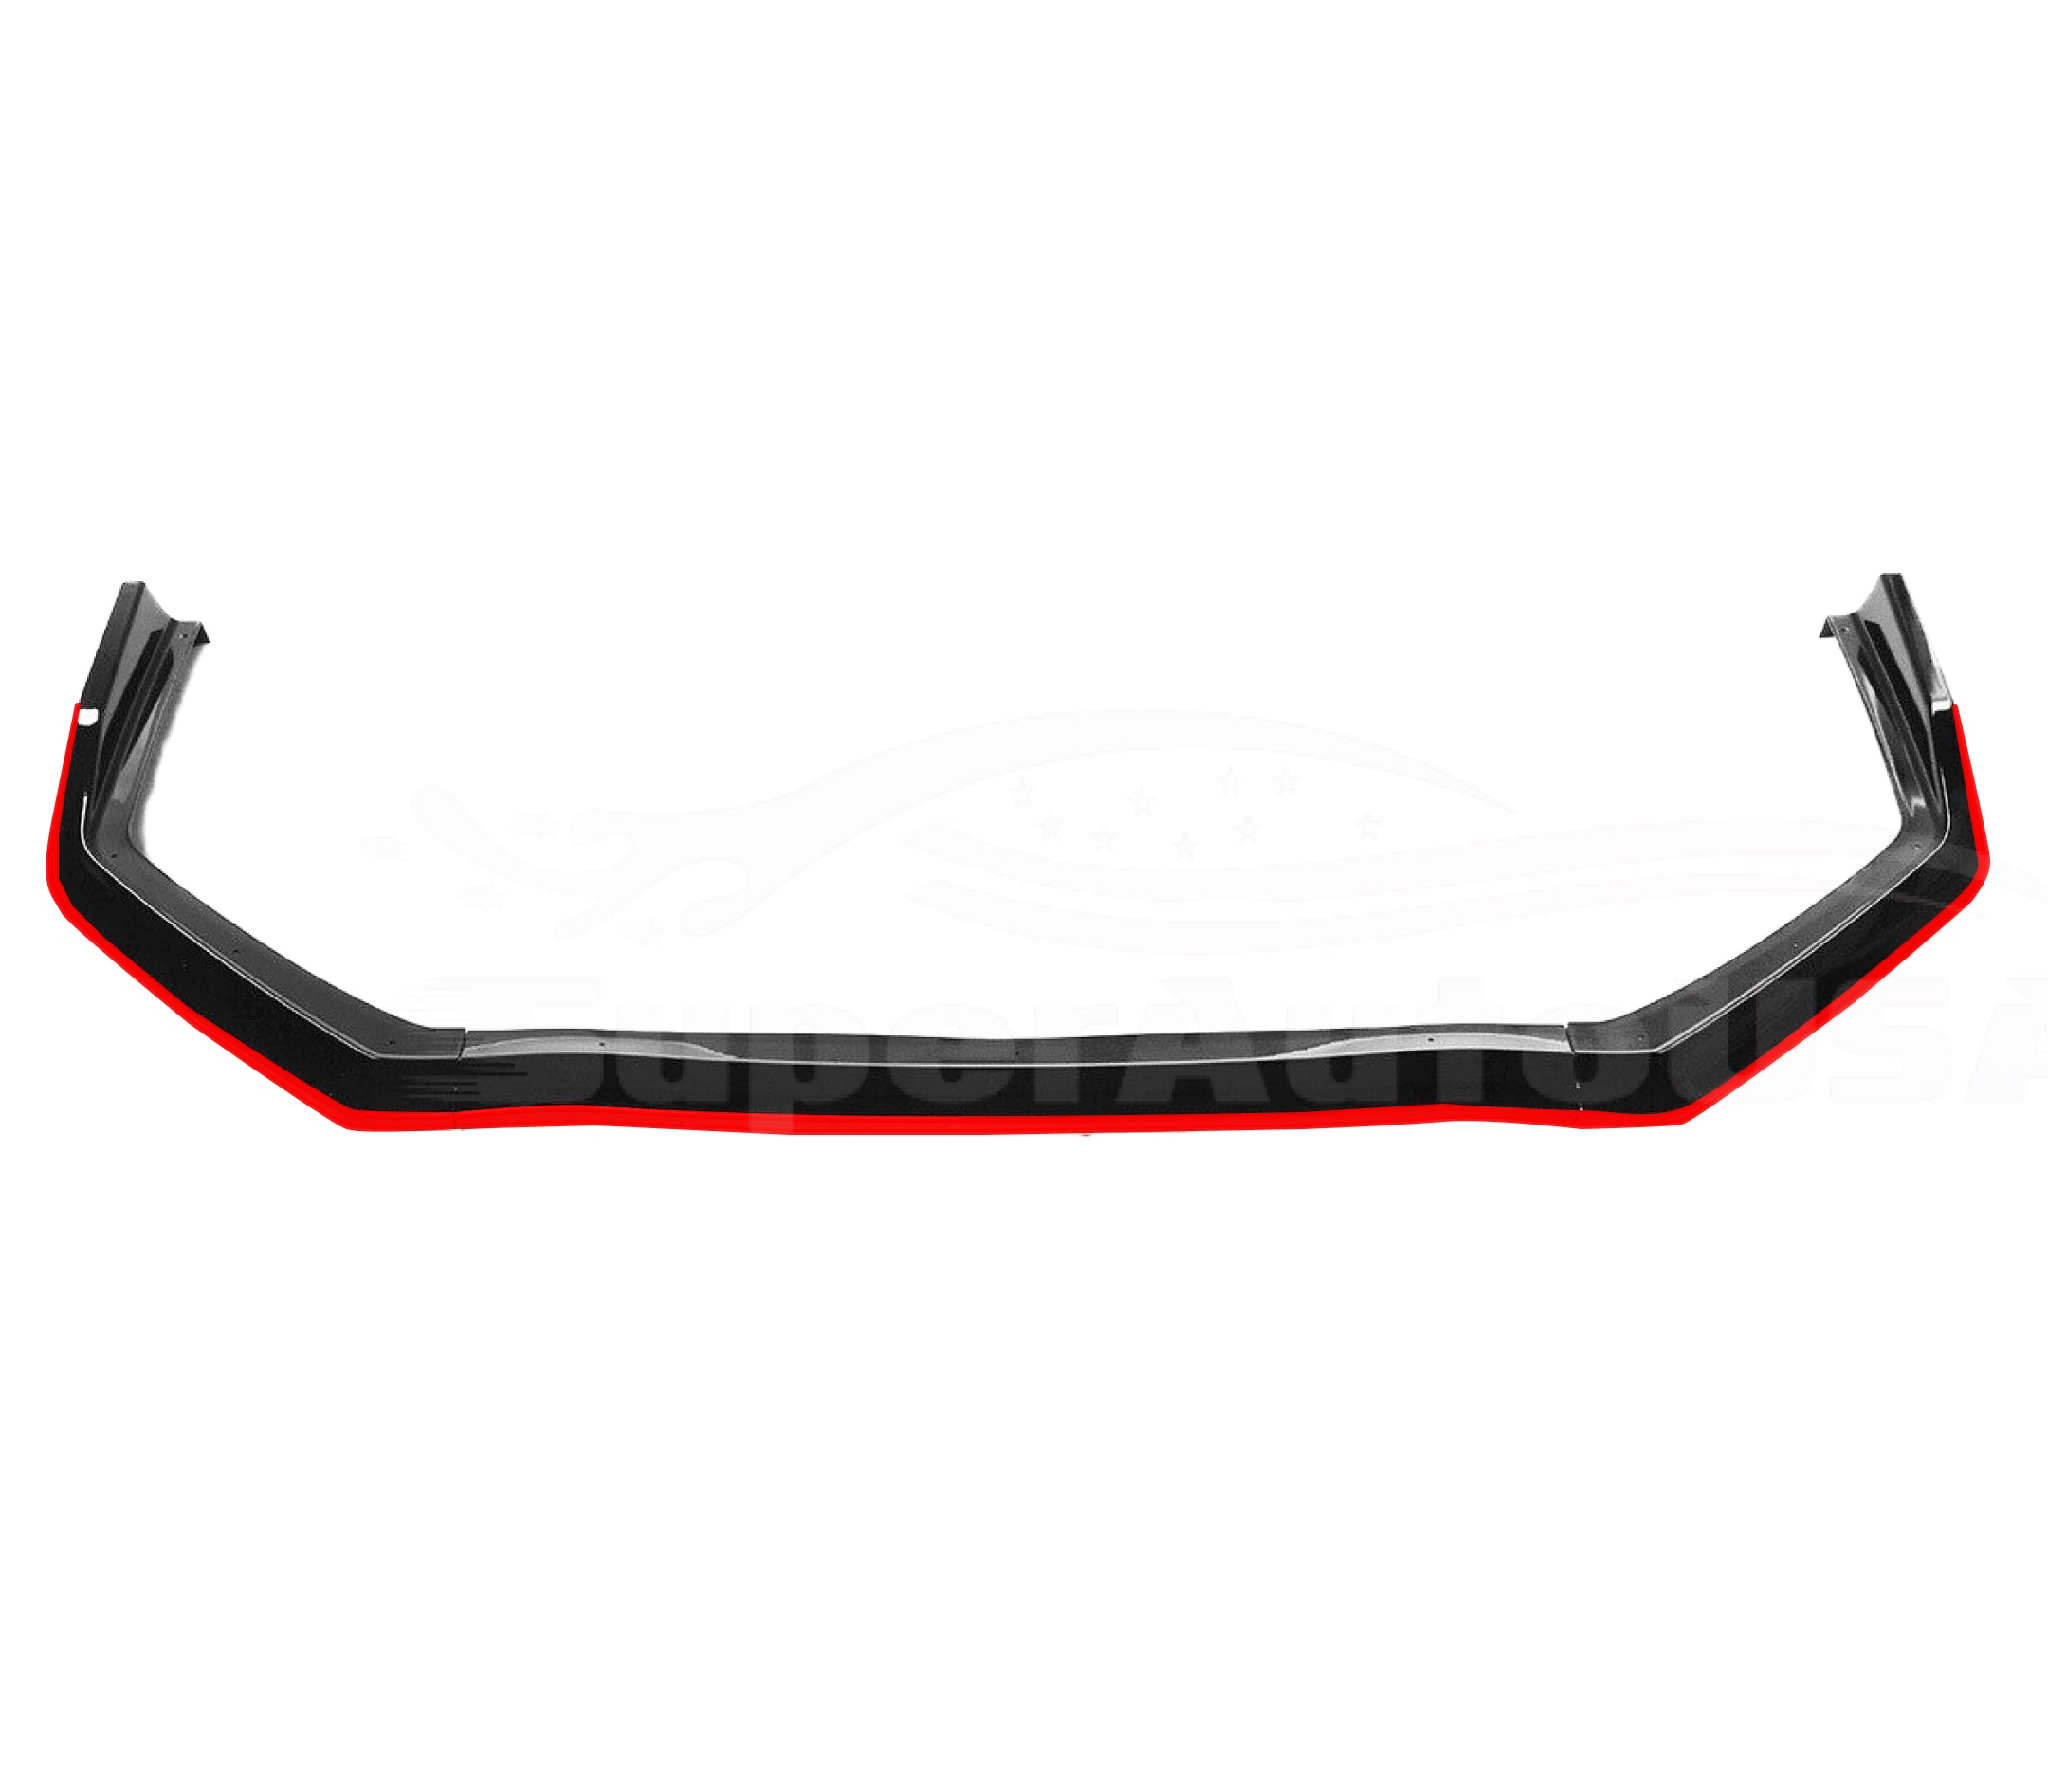 Fits 2015-2021 Subaru WRX STI Front Splitter Spoiler Lip (Gloss Black with Red Trim)